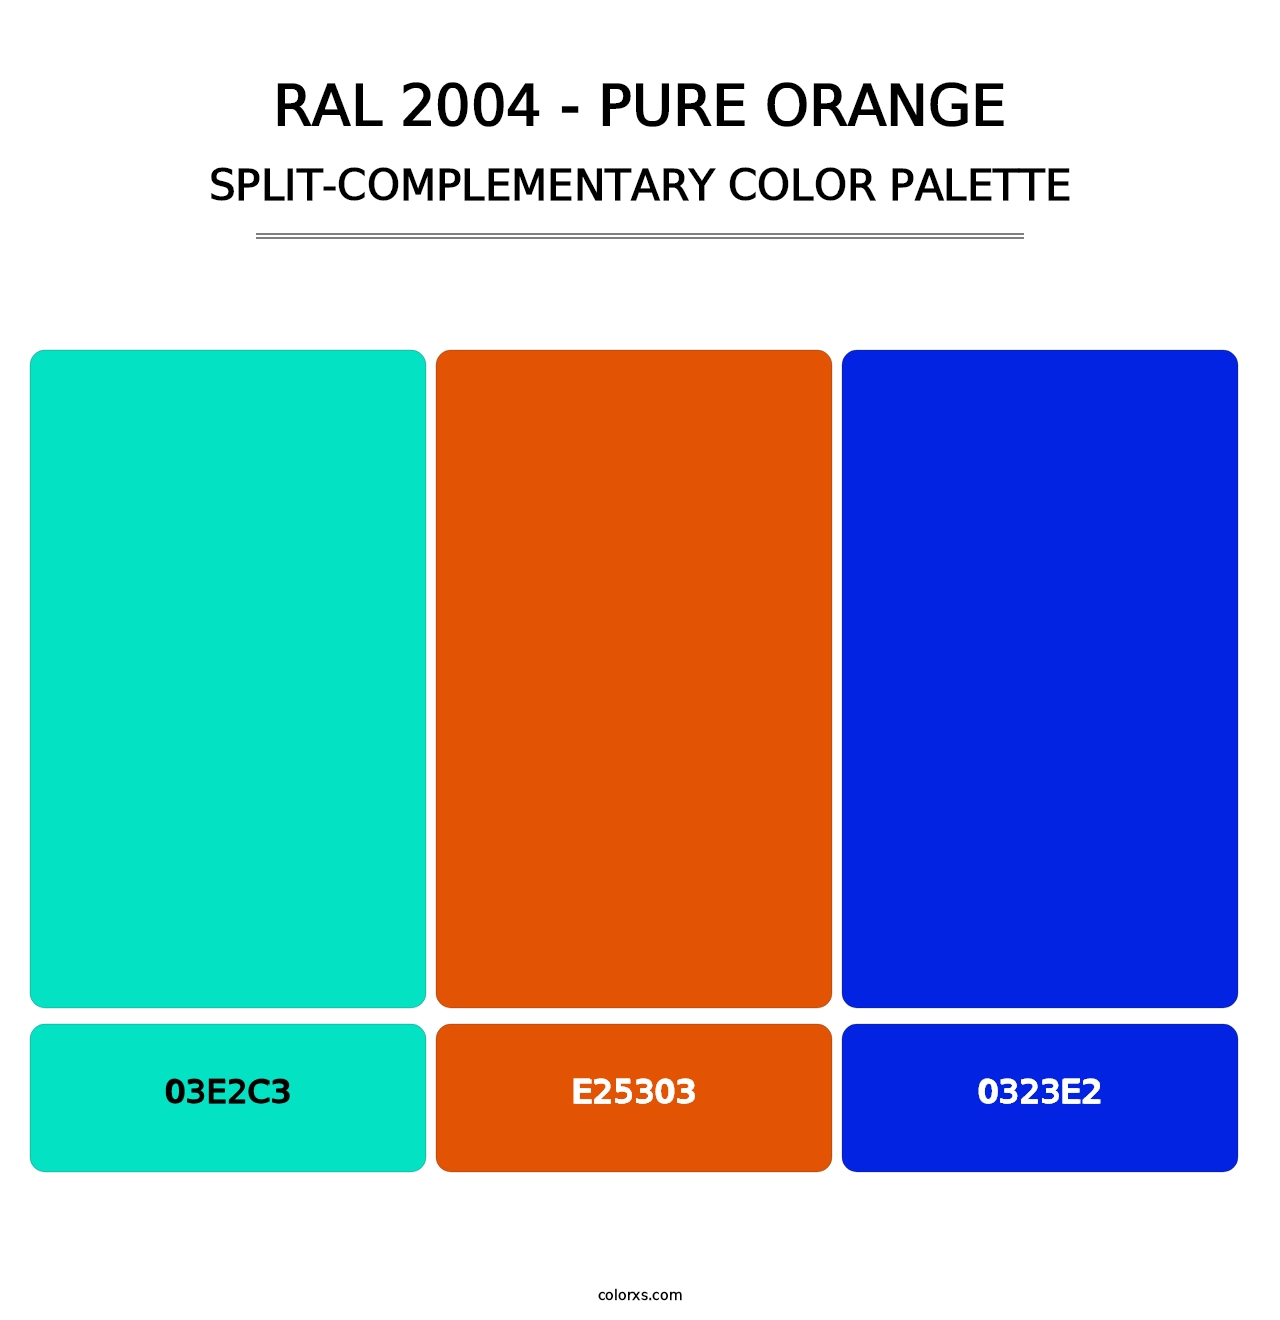 RAL 2004 - Pure Orange - Split-Complementary Color Palette